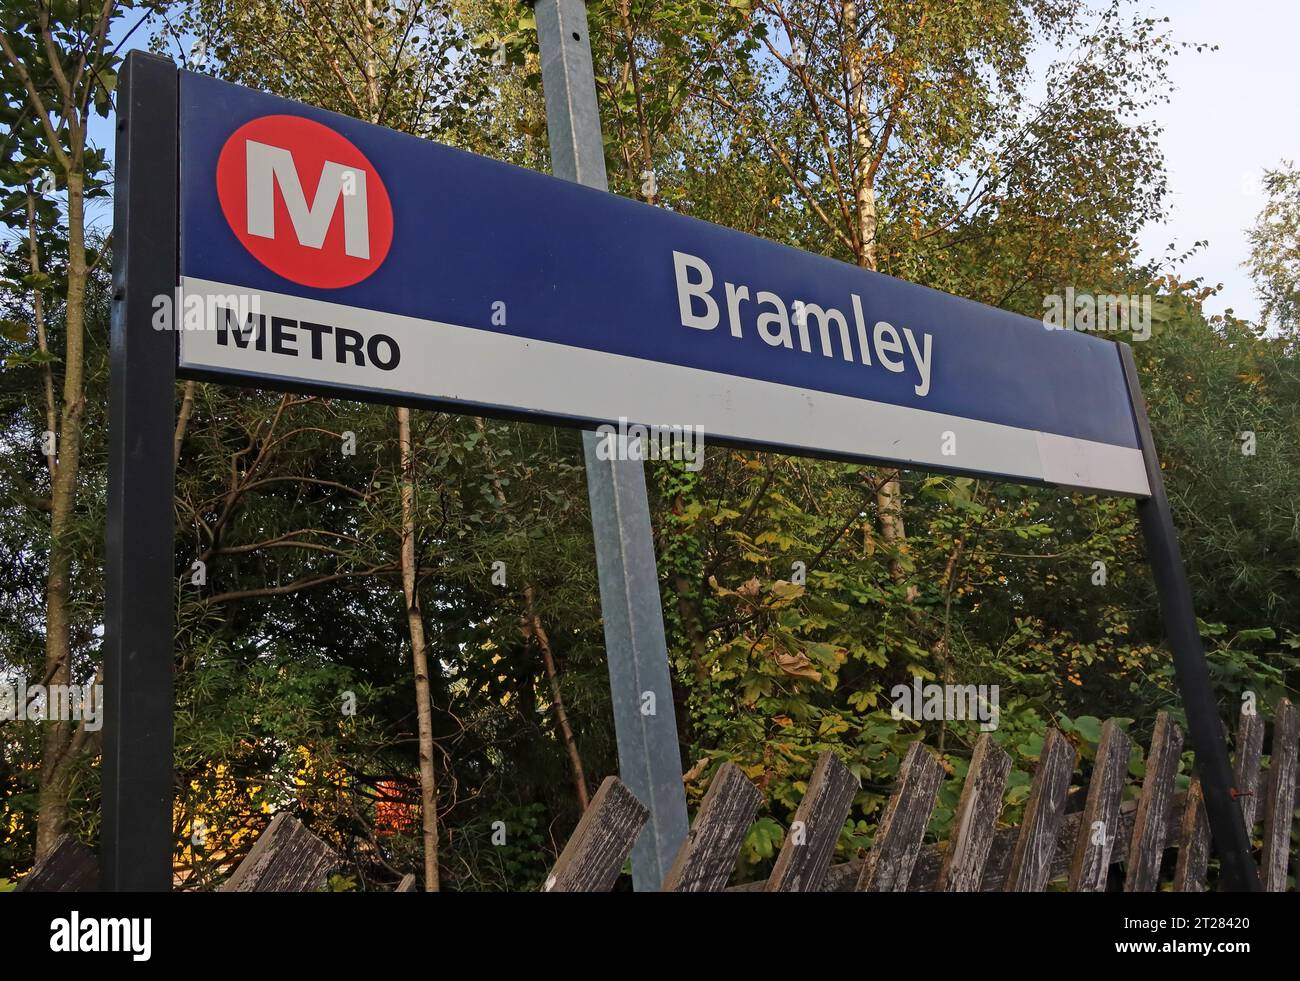 Bramley railway station, part of the West Yorkshire Metro network, Swinnow Road, Bramley, West Yorkshire, LS13 4DU Stock Photo